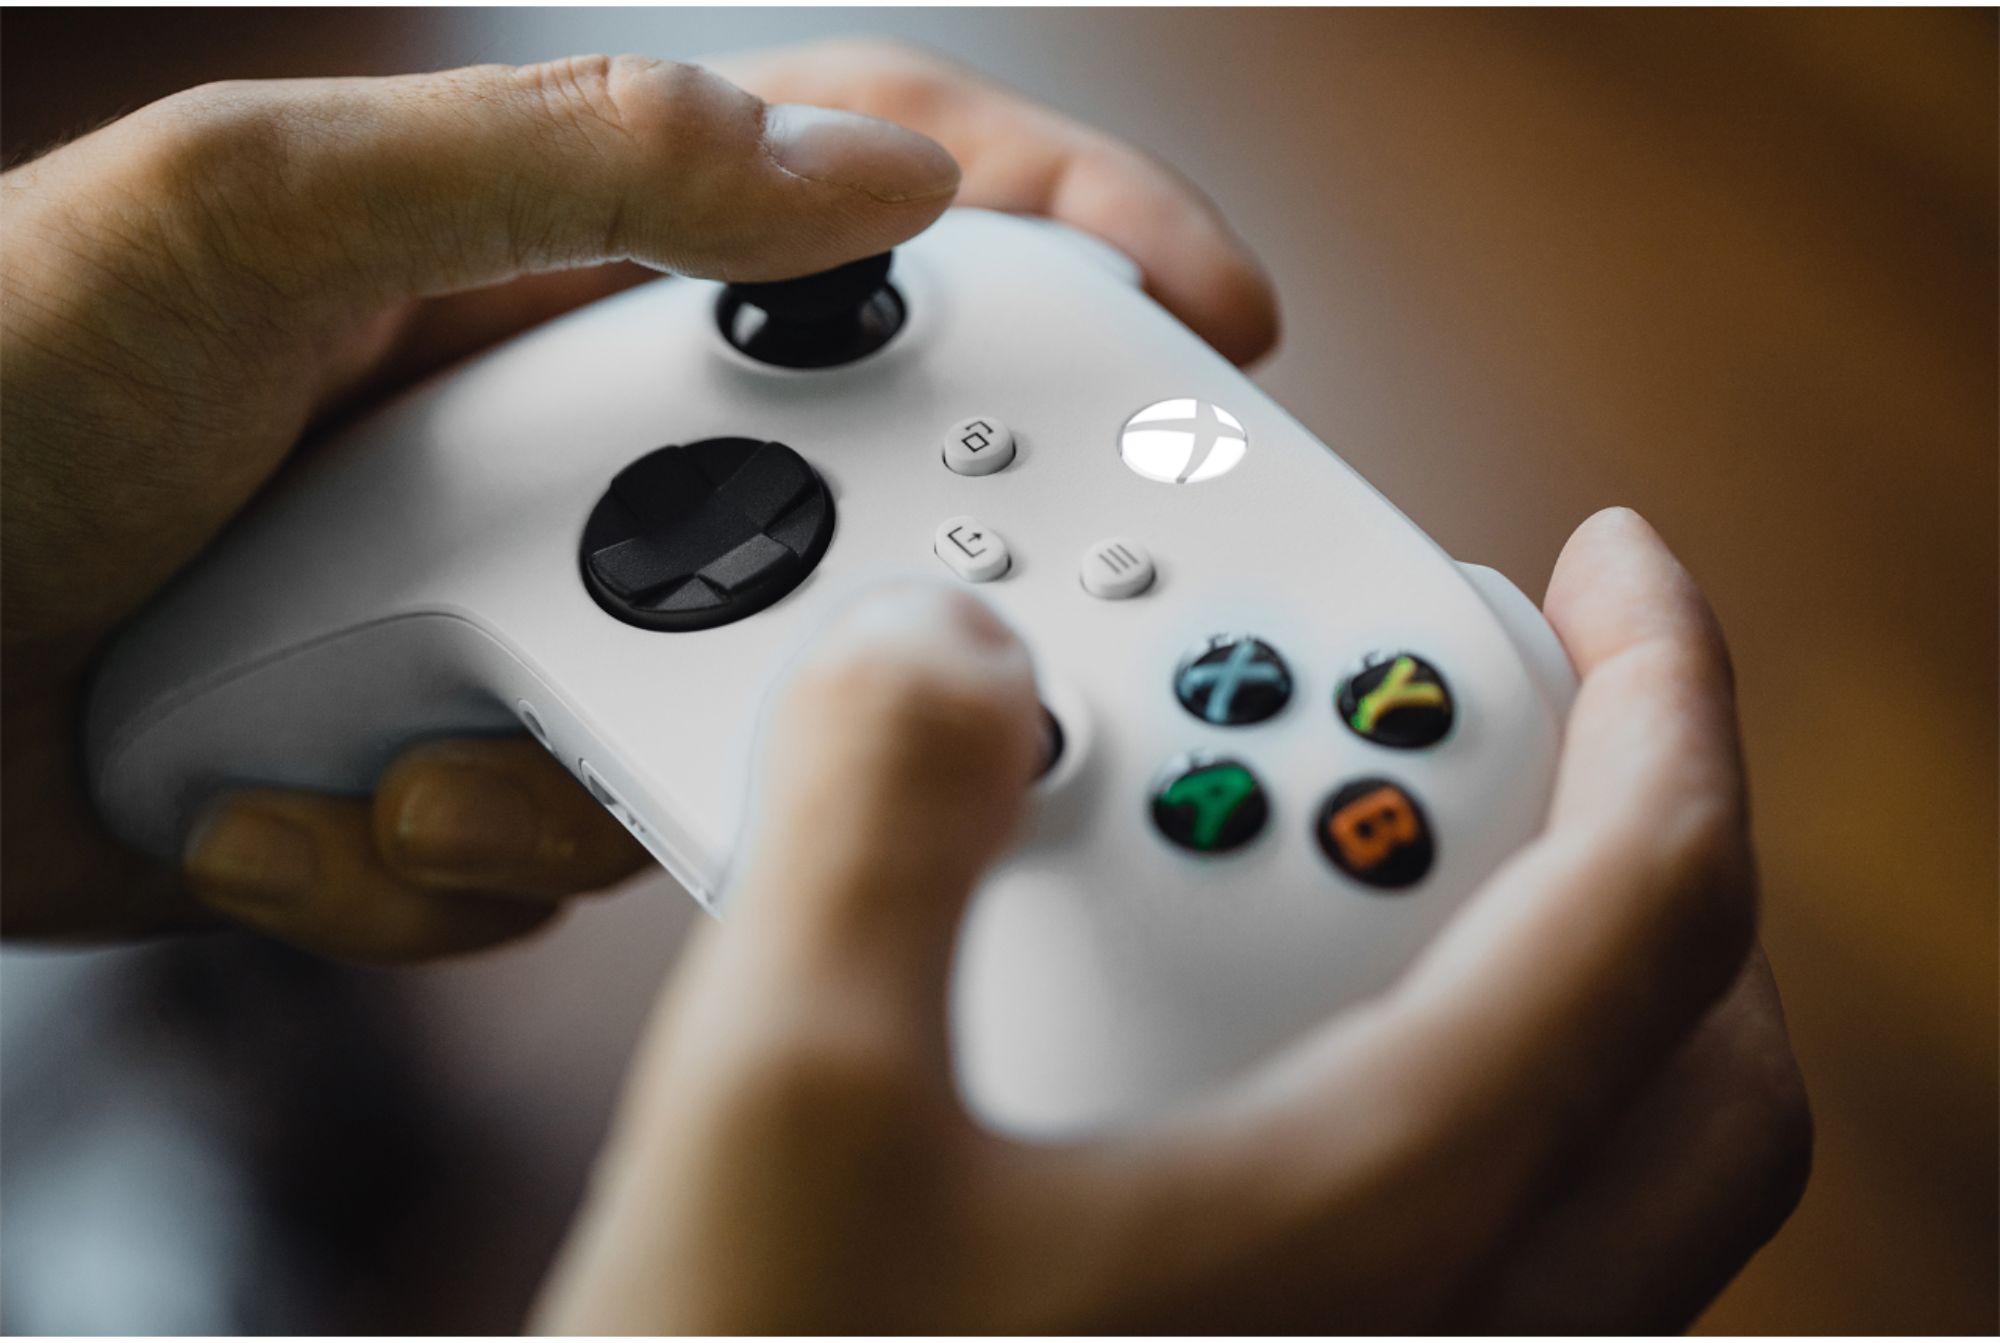 Control Joystick Inalámbrico Microsoft Xbox Wireless Control Color Blanco